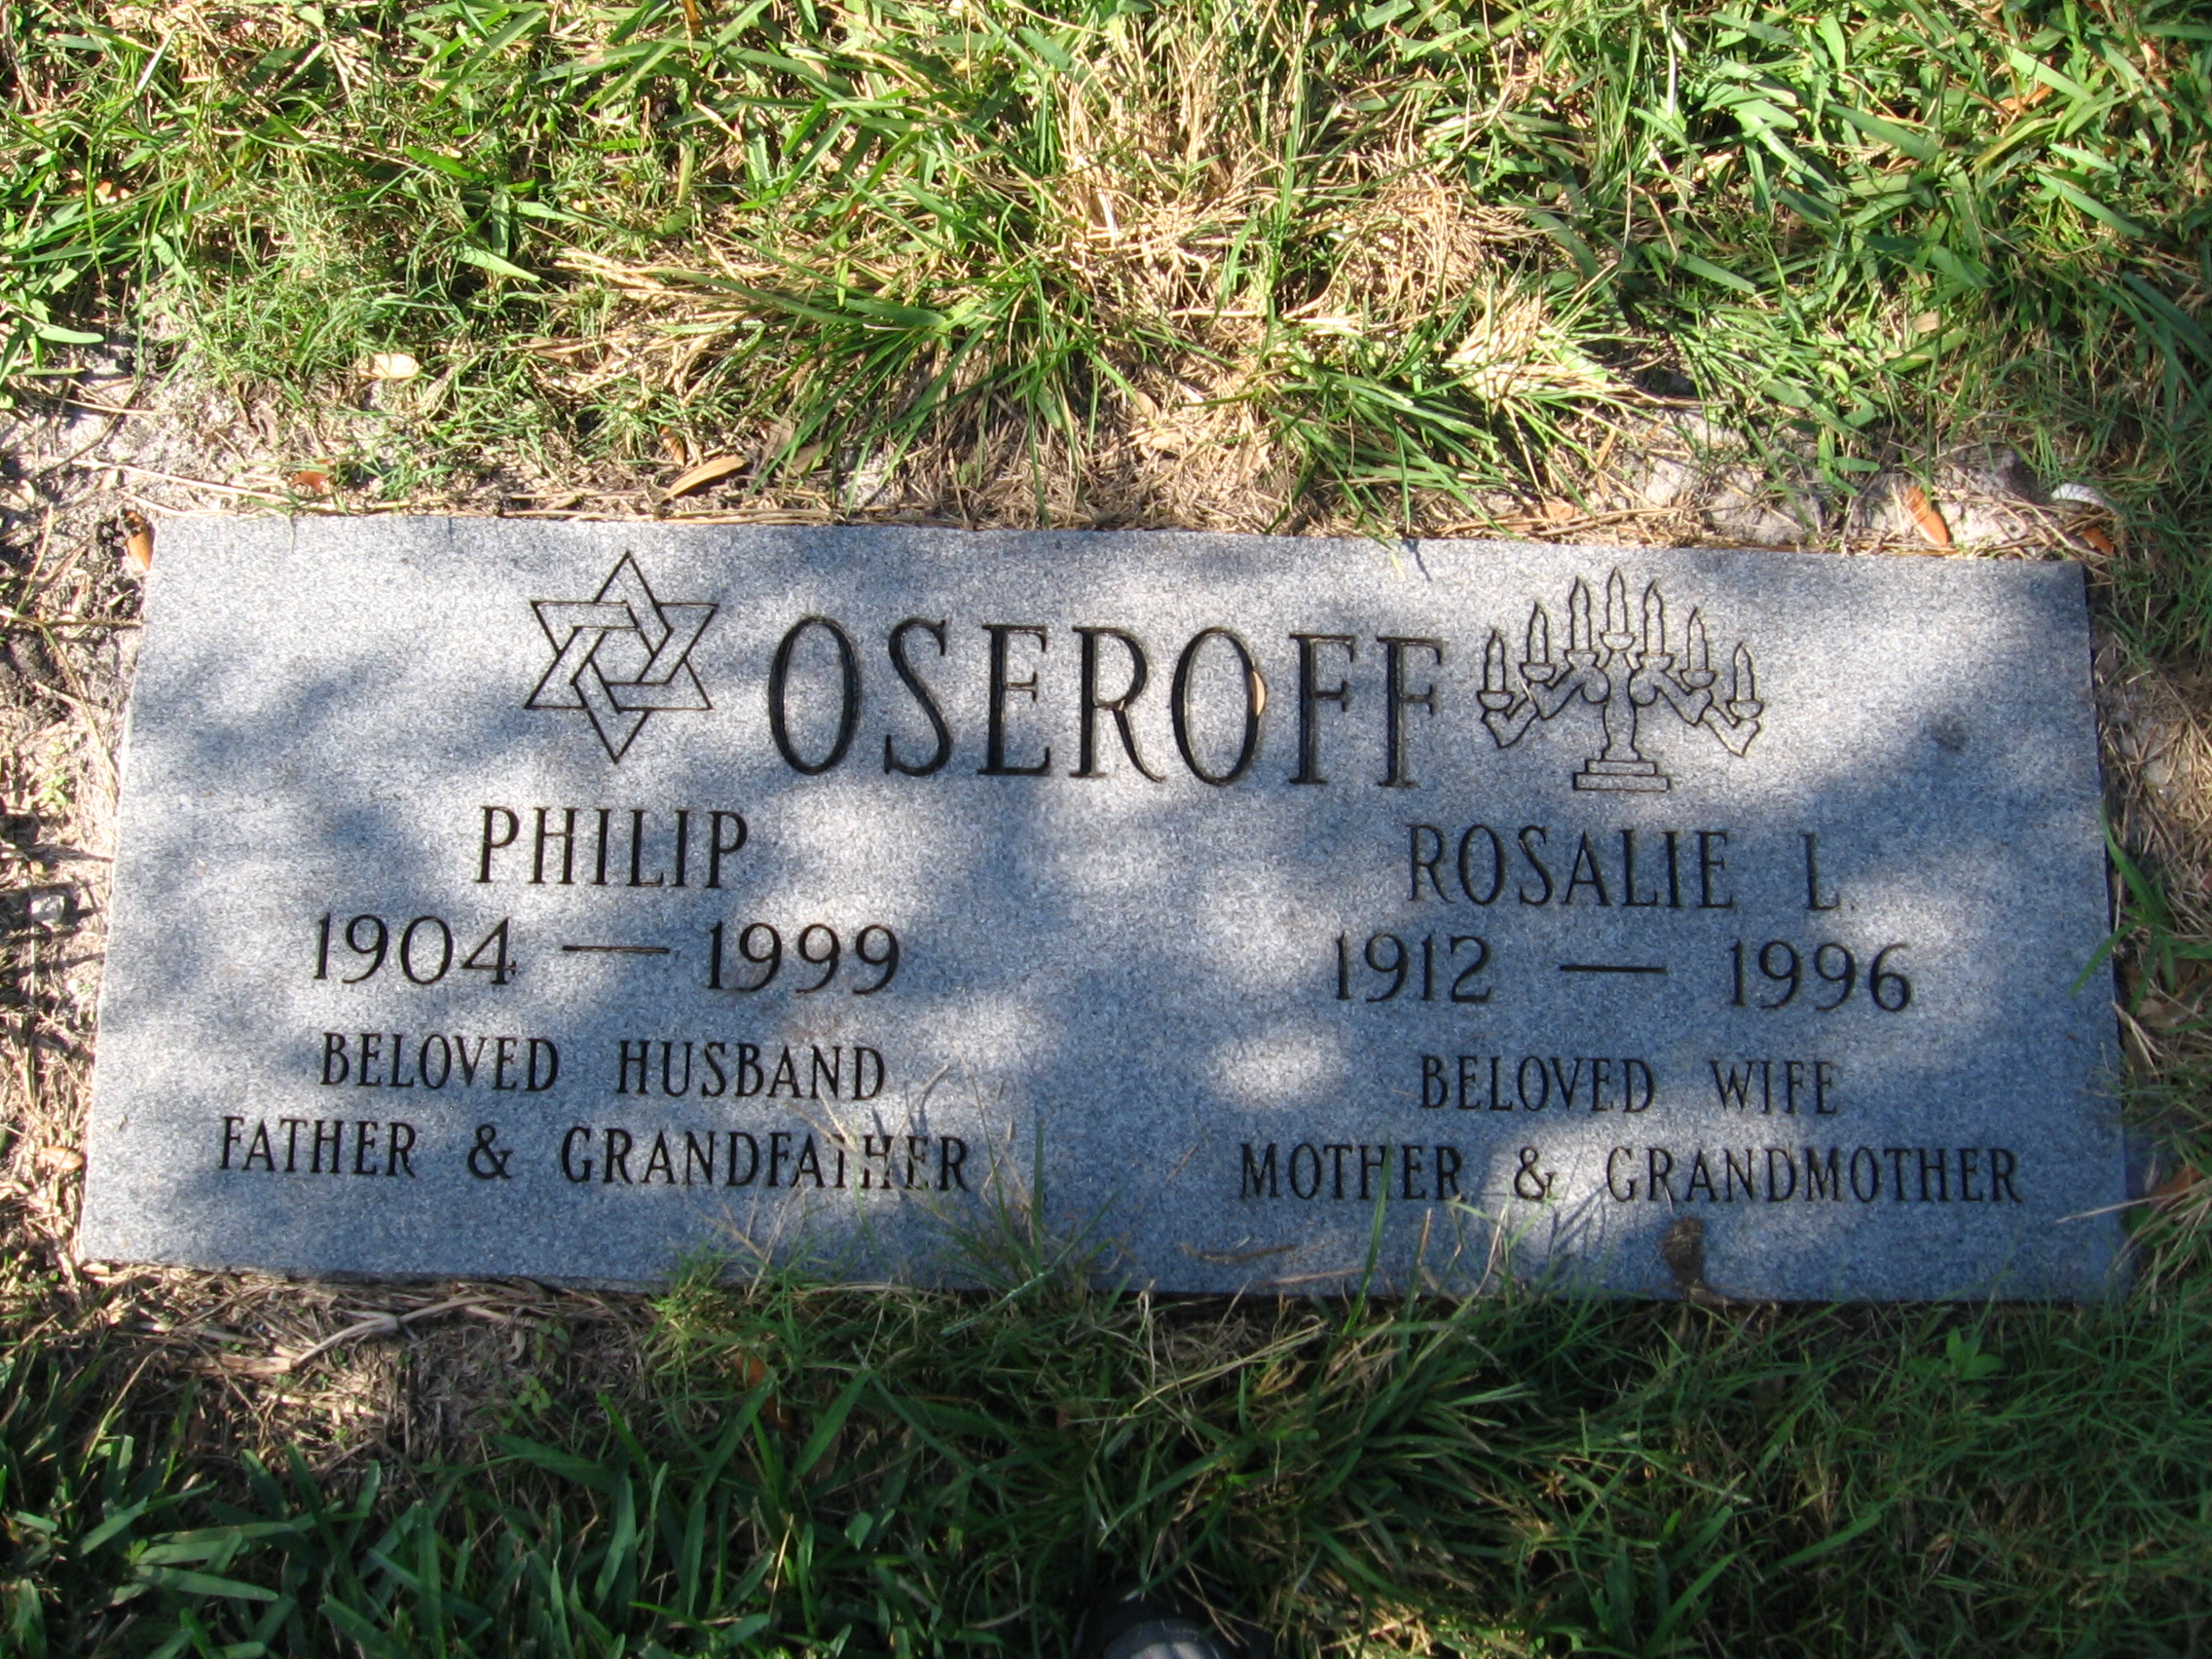 Philip Oseroff